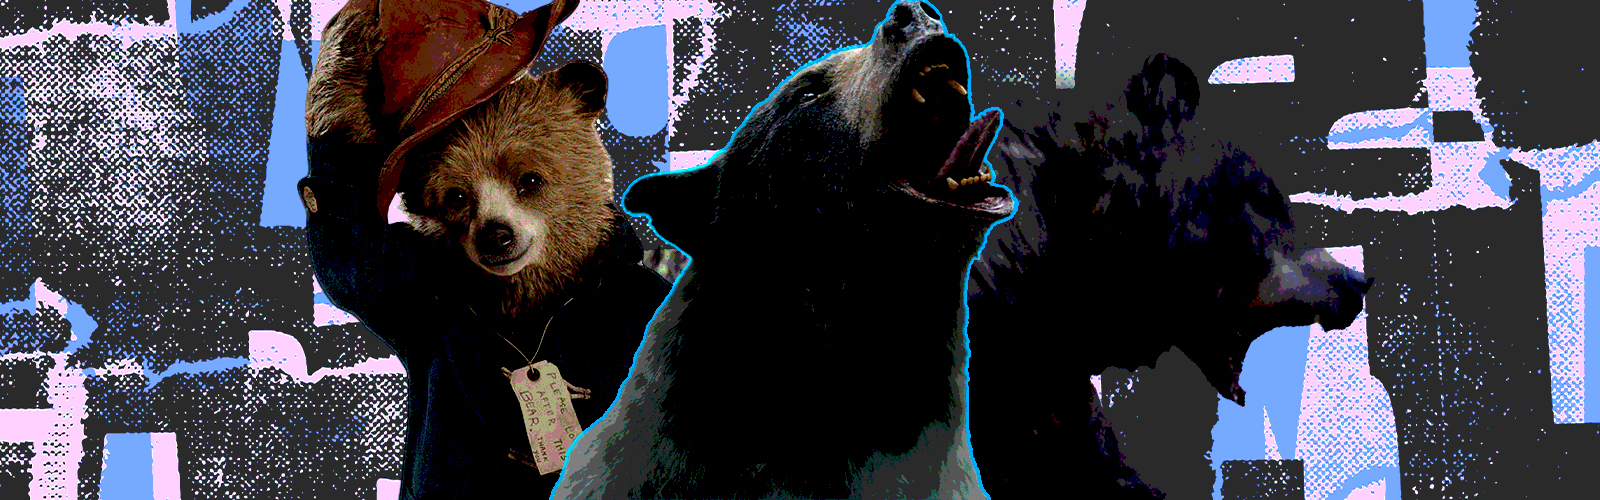 Bear Movies Graphic